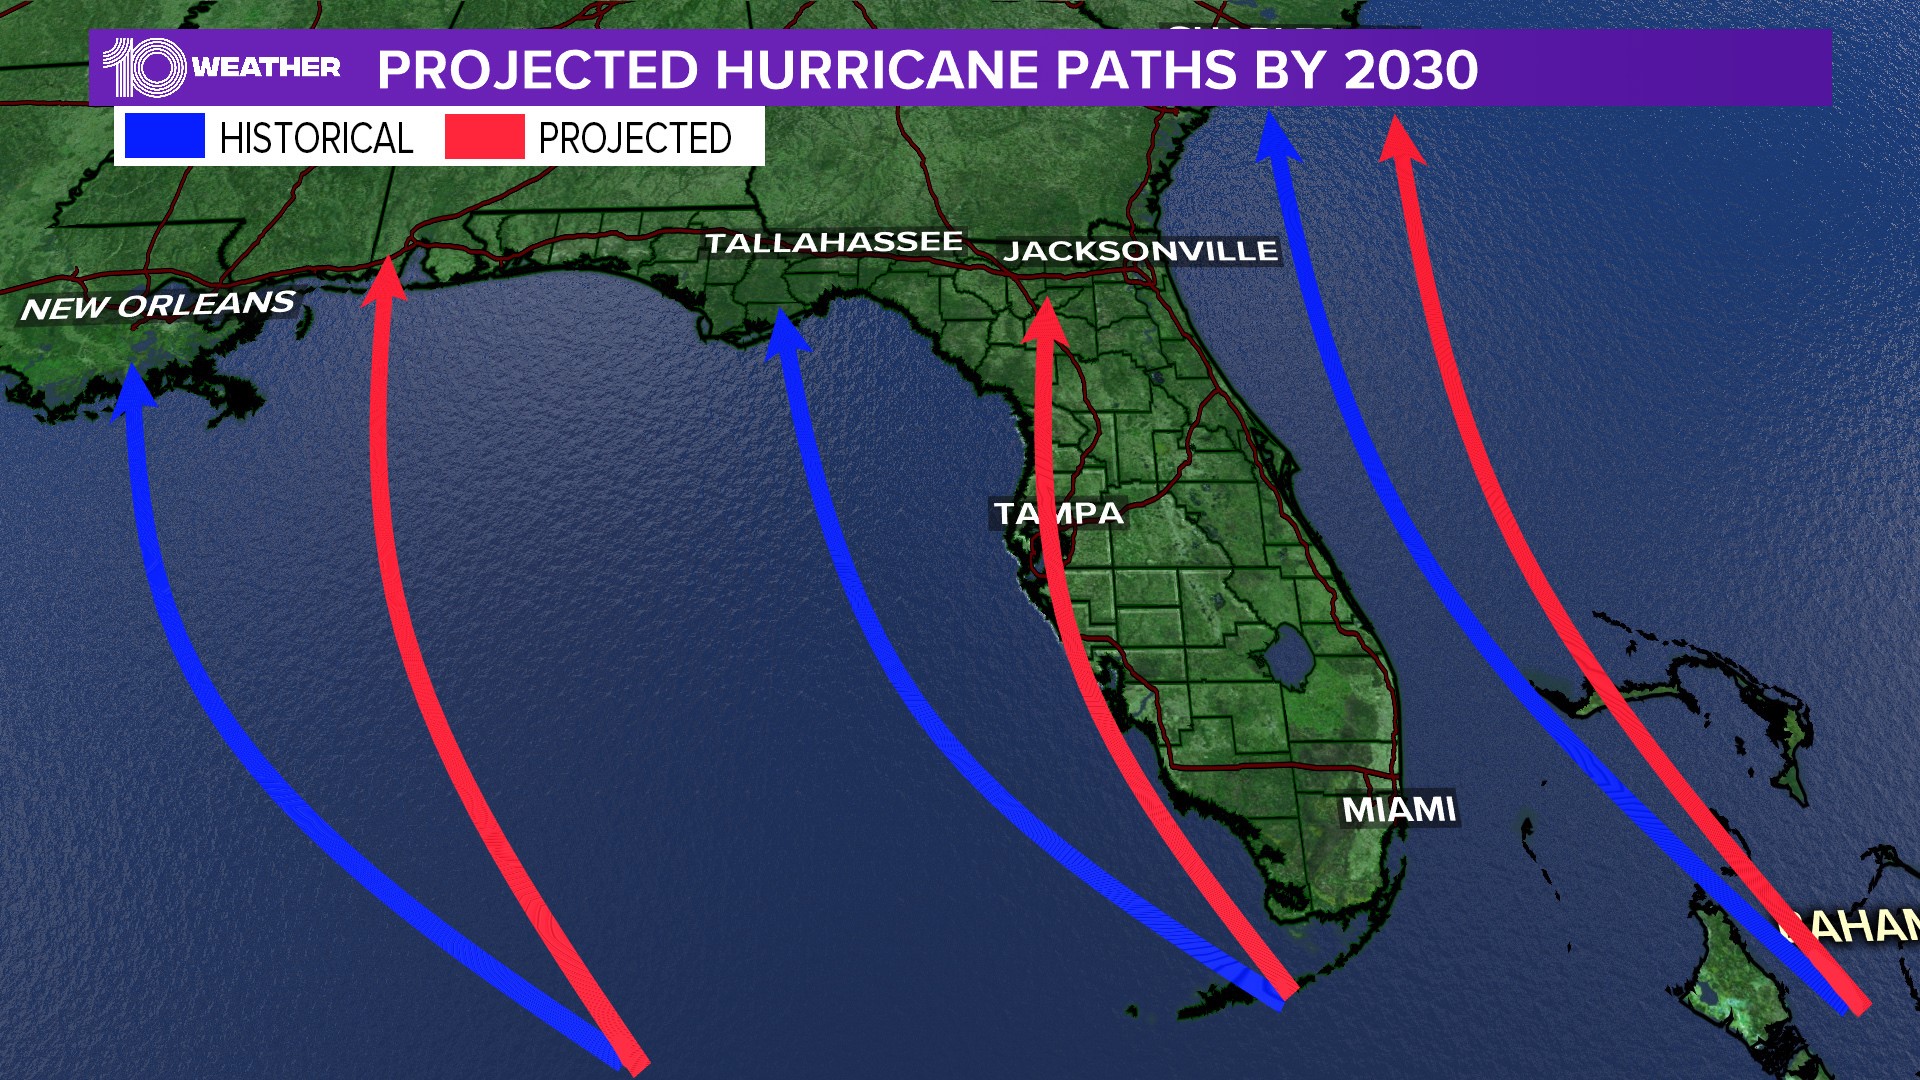 NASA scientist predicts increased hurricane risk for Tampa Bay